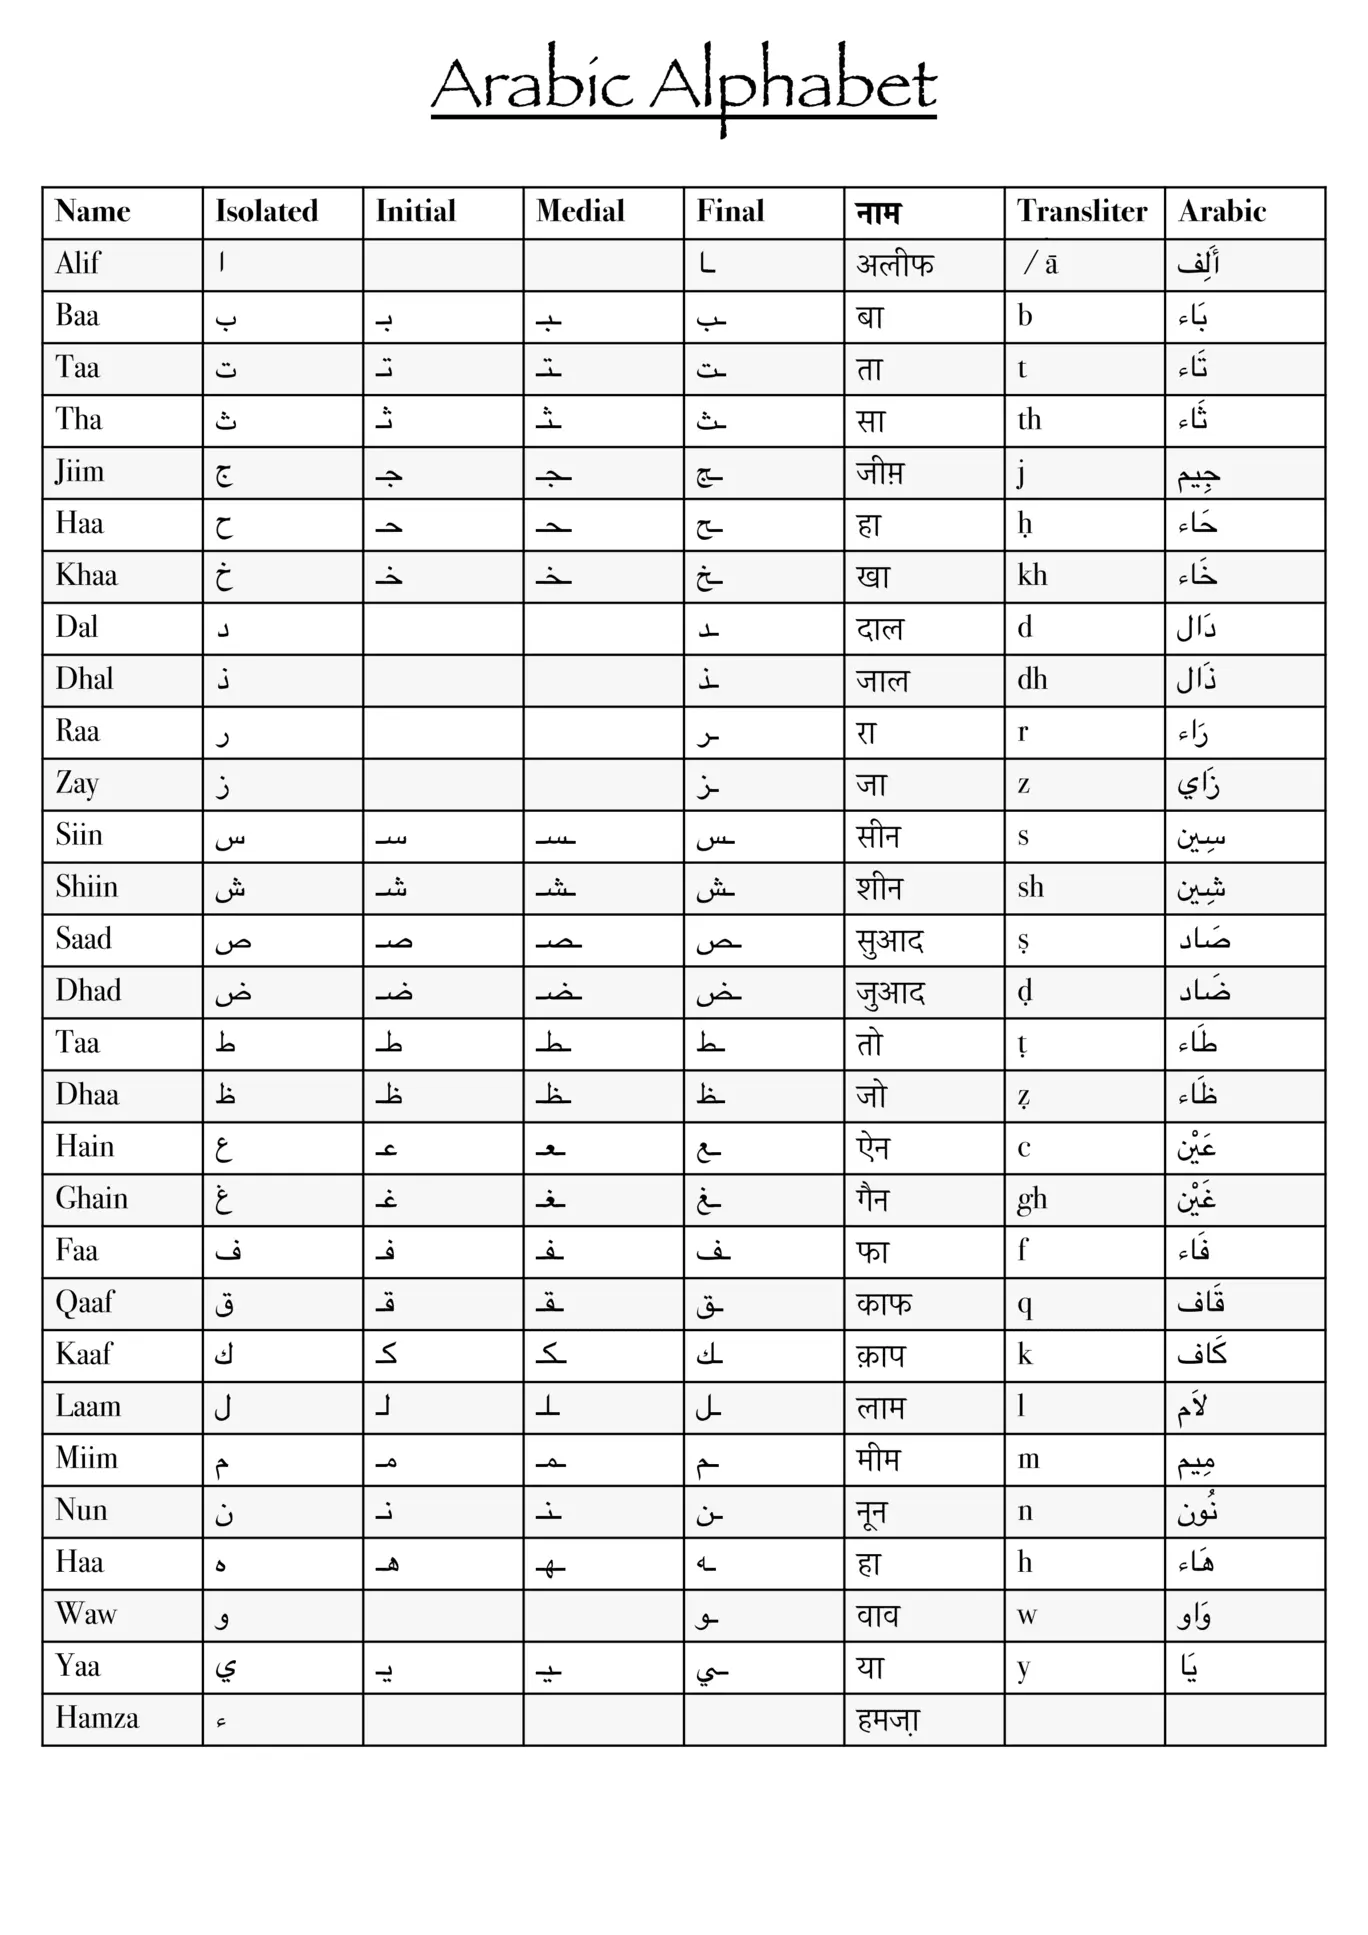 Arabic Alphabet Chart.webp